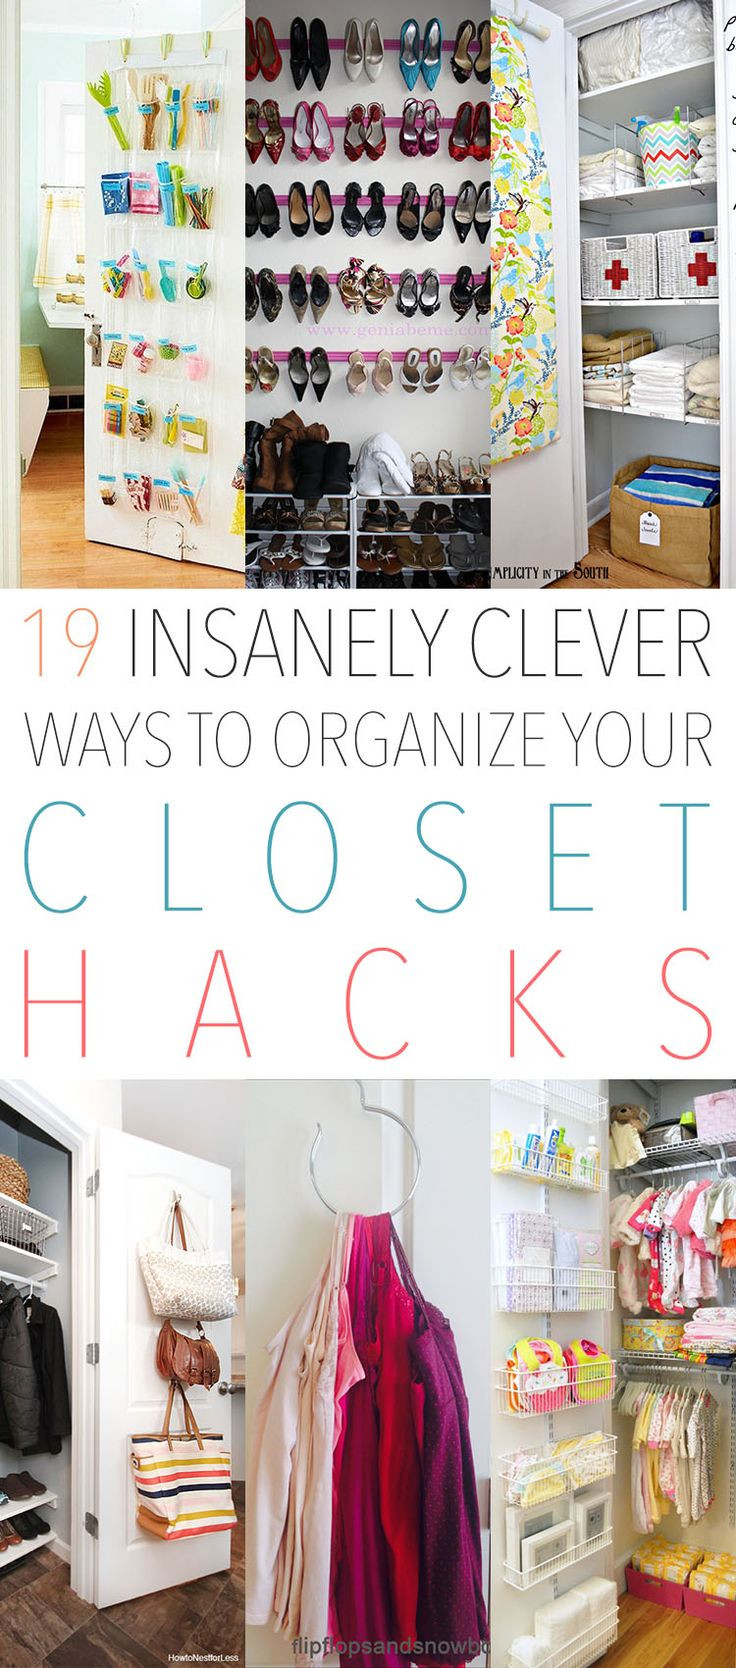 DIY Ways To Organize Your Closet
 best DIY Ideas images on Pinterest